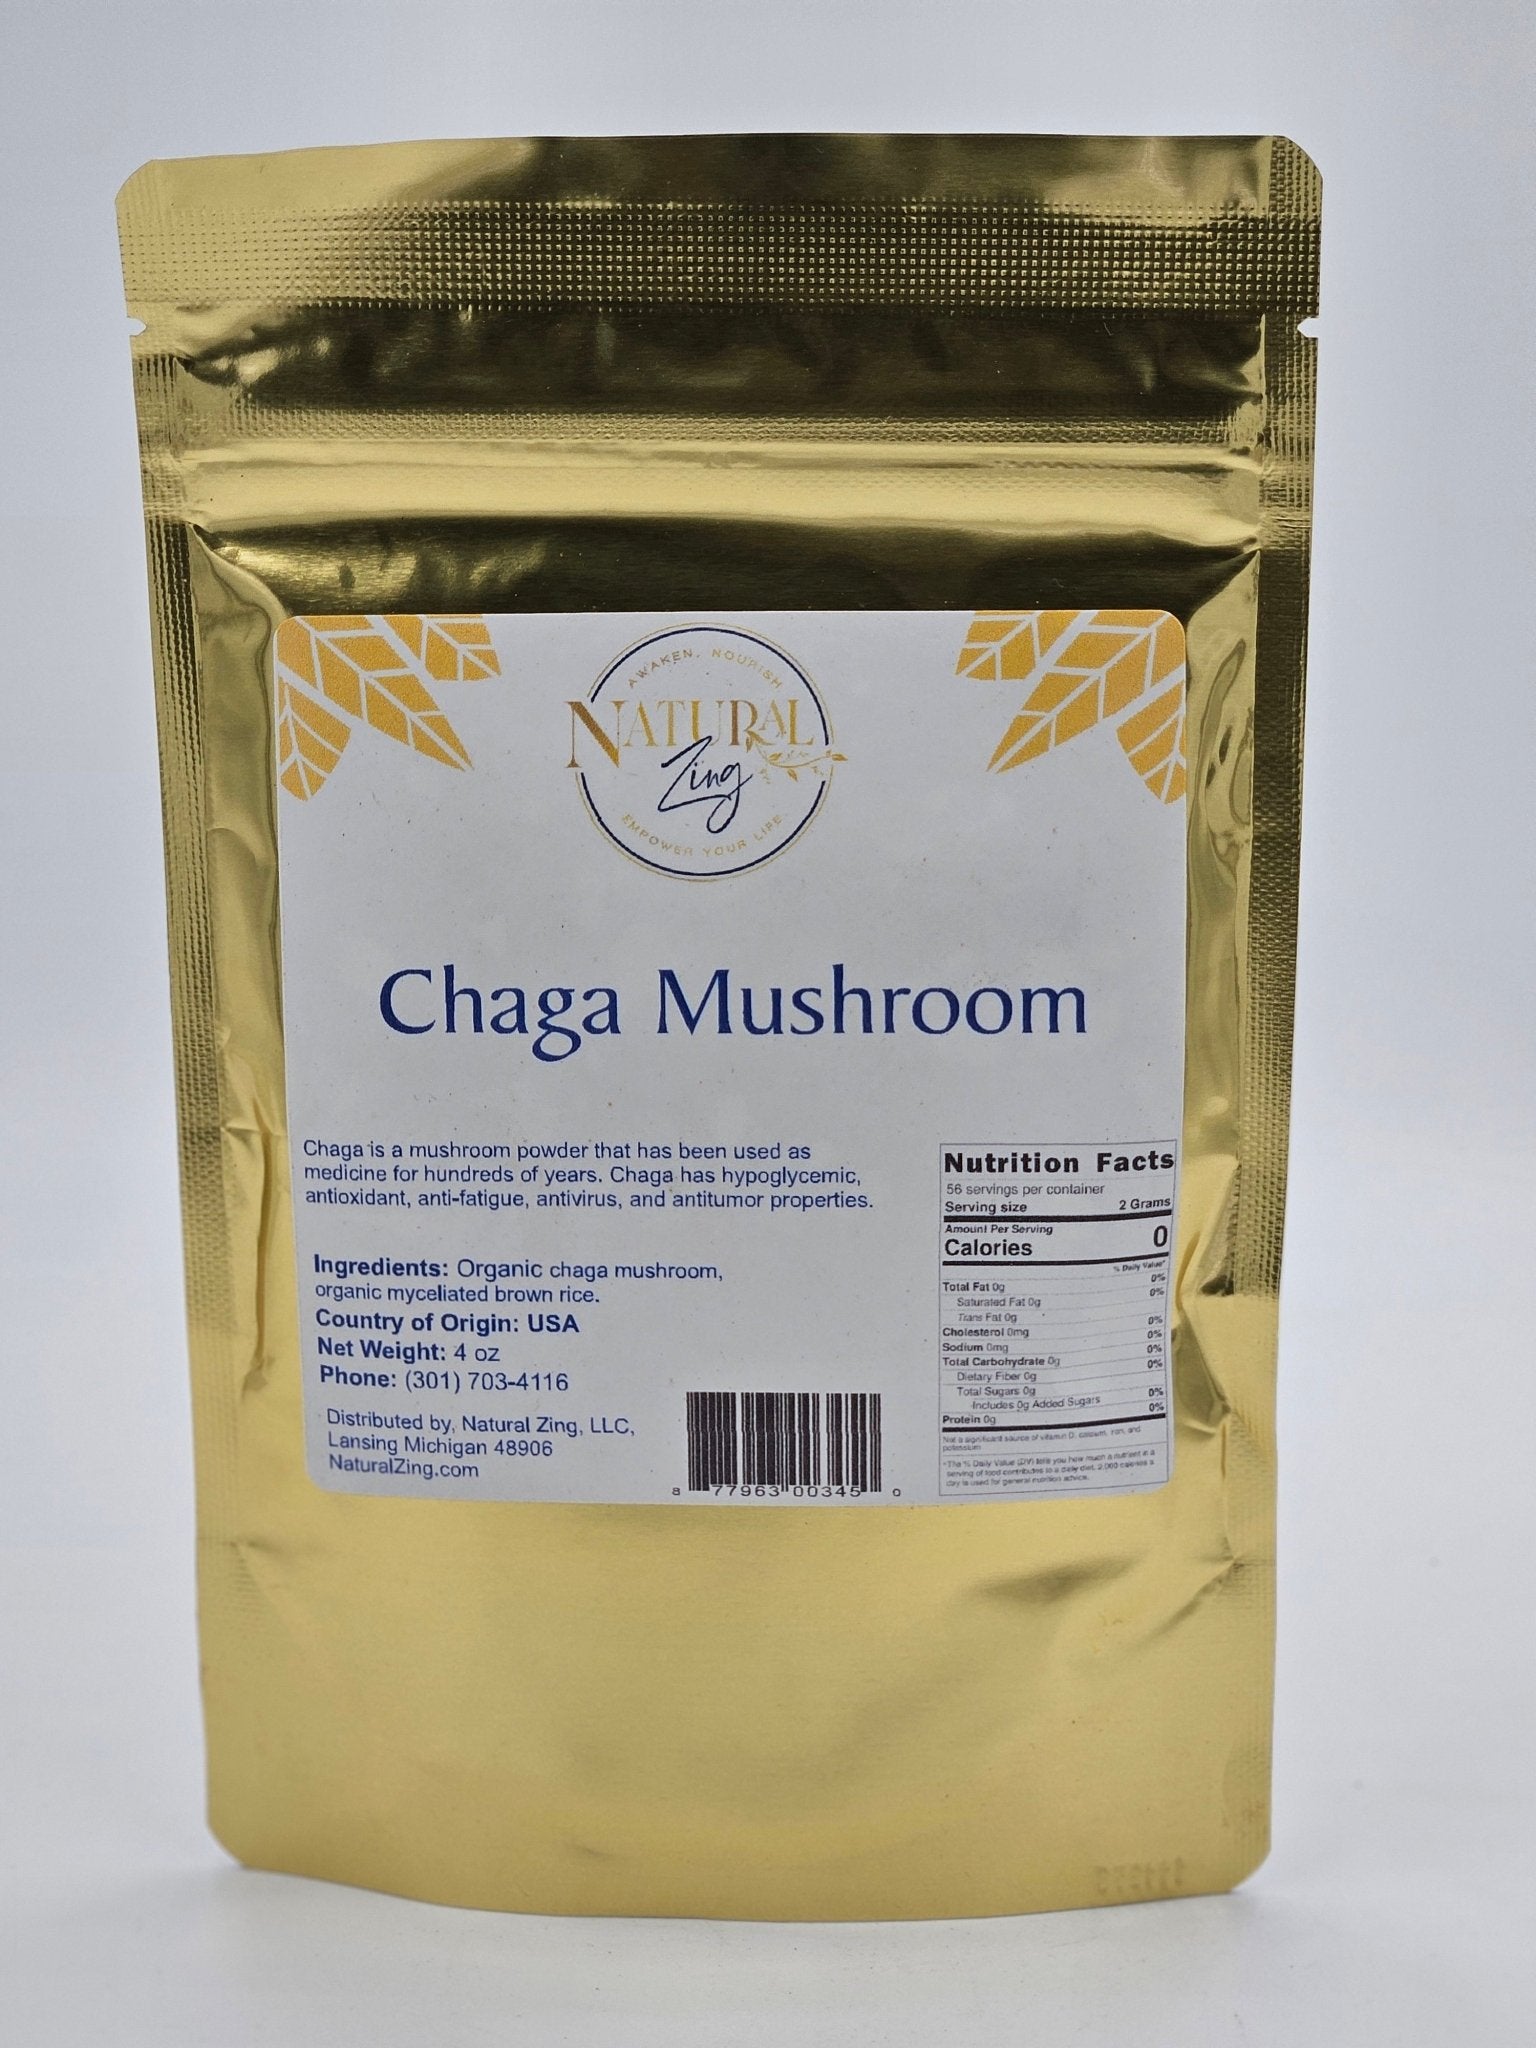 Mushroom Powder, Chaga 4 oz - Natural Zing